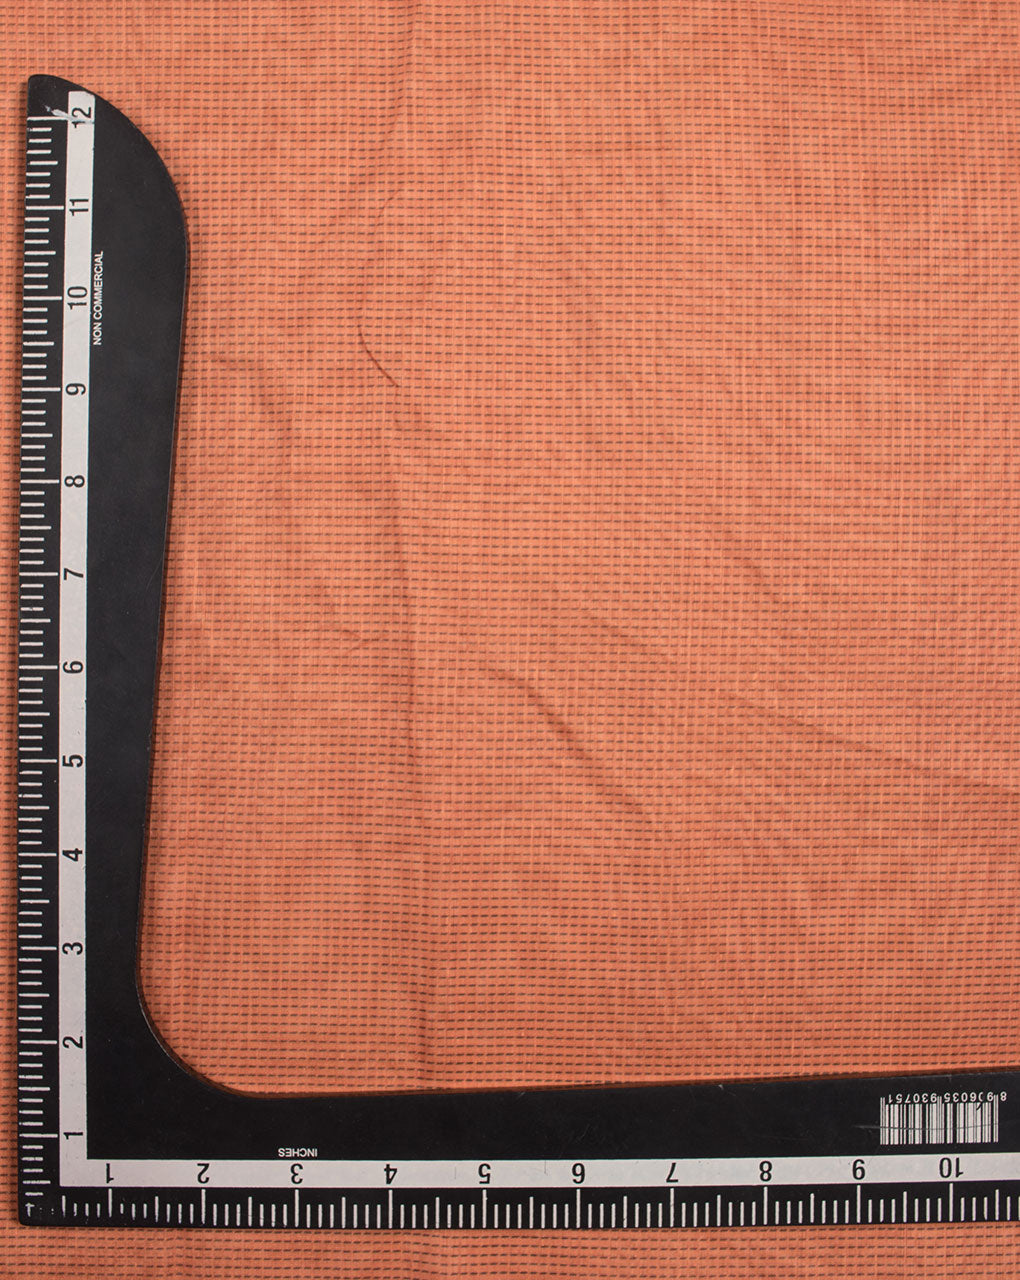 Orange Digital Print Chanderi Fabric - Fabriclore.com